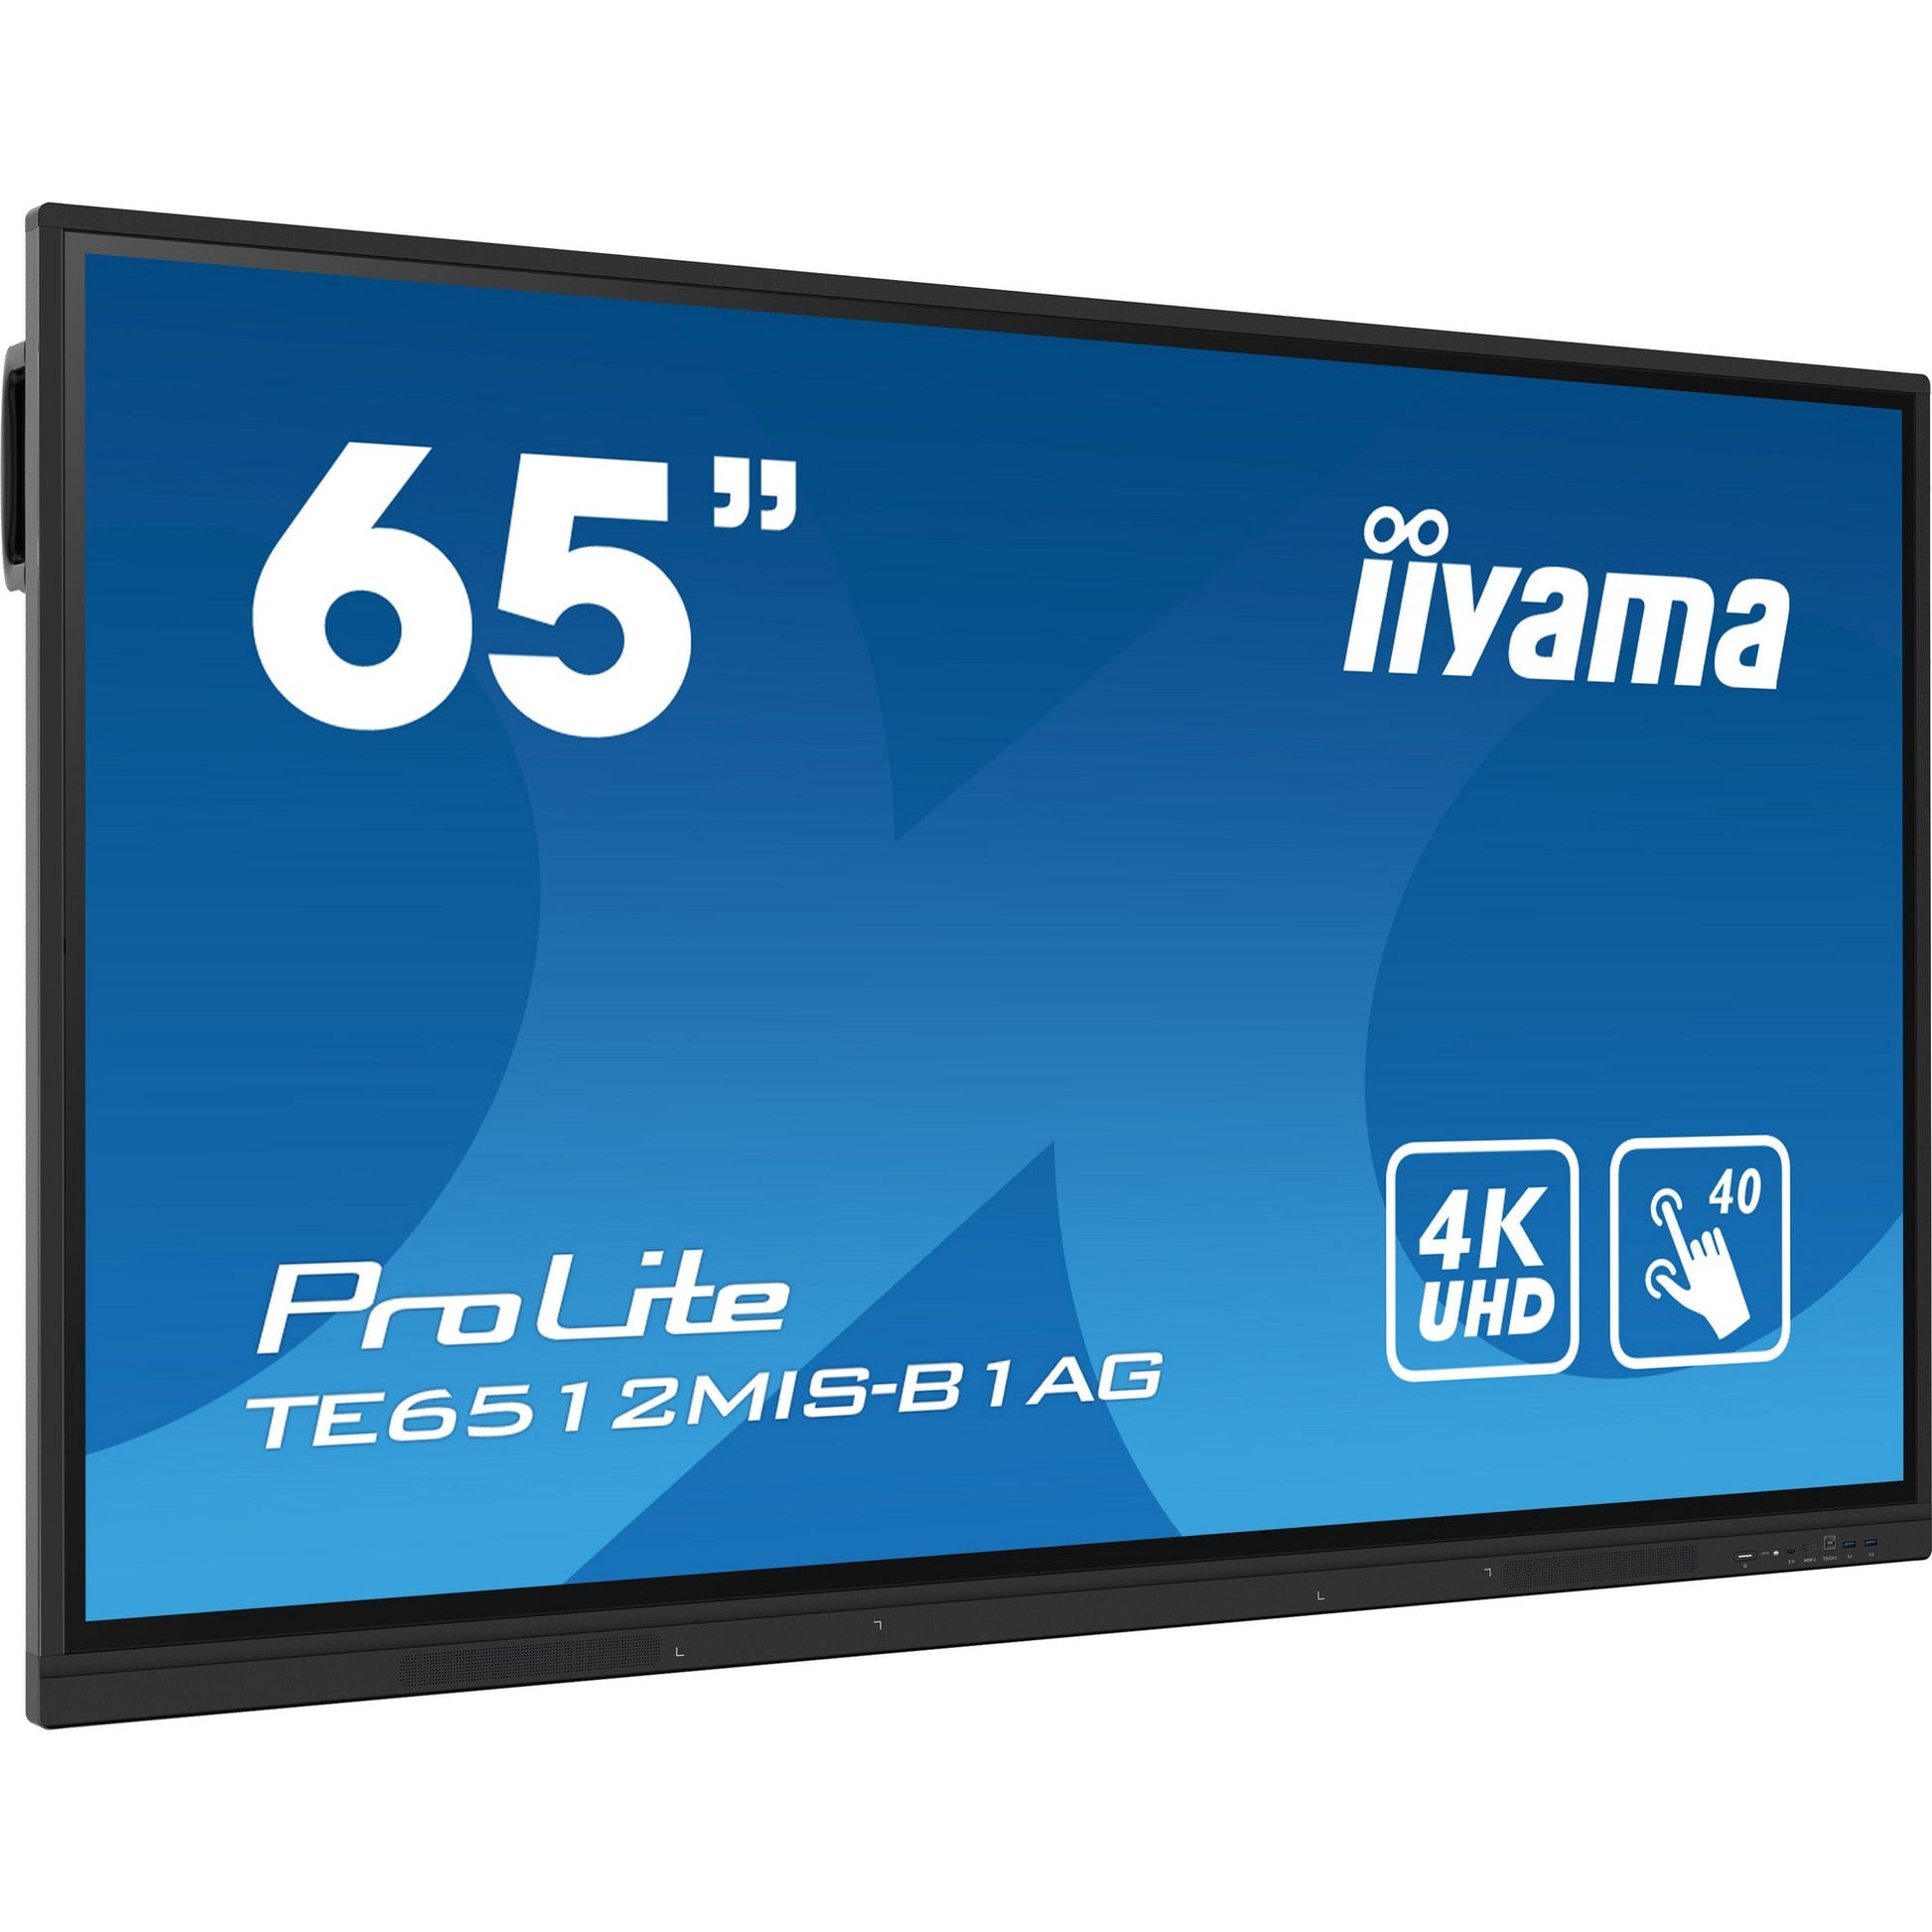 Dark Cyan Iiyama ProLite TE6512MIS-B1AG 65" Interactive 4K UHD Touchscreen featuring a 4K interface with User Profiles